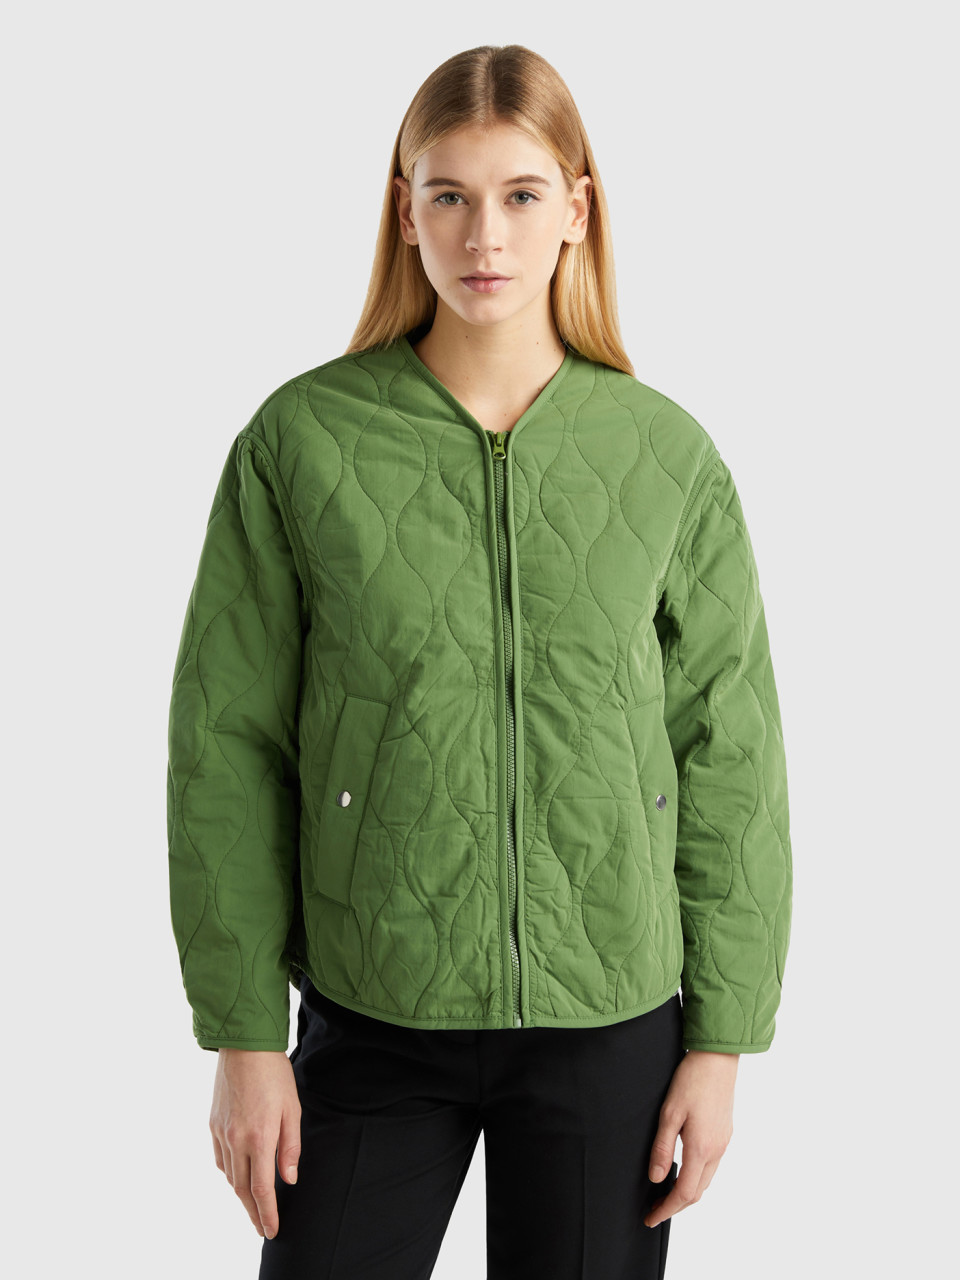 Benetton, Recycled Nylon Padded Jacket, Military Green, Women